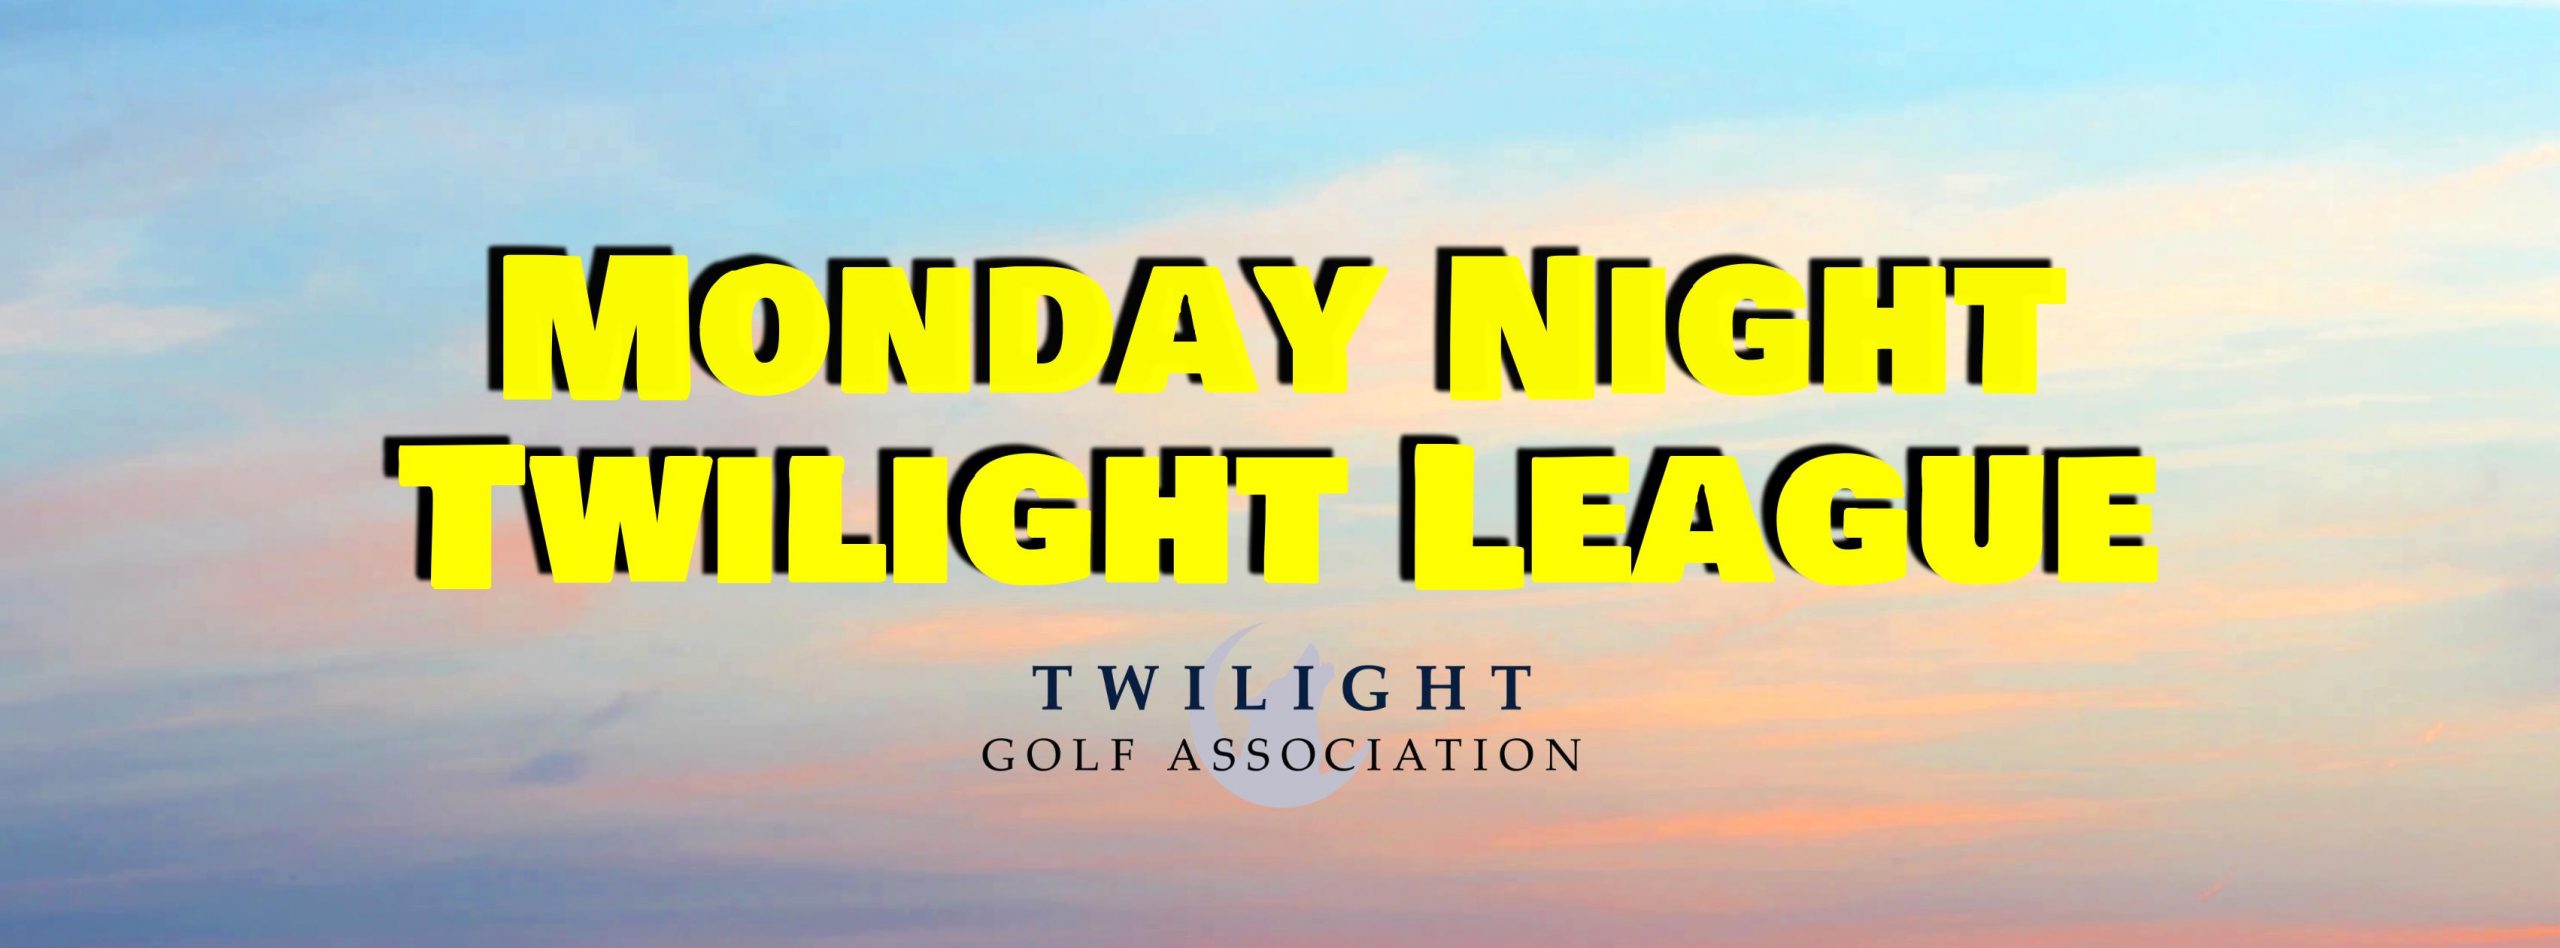 Monday Night Twilight League at Pittsburgh North Golf Club